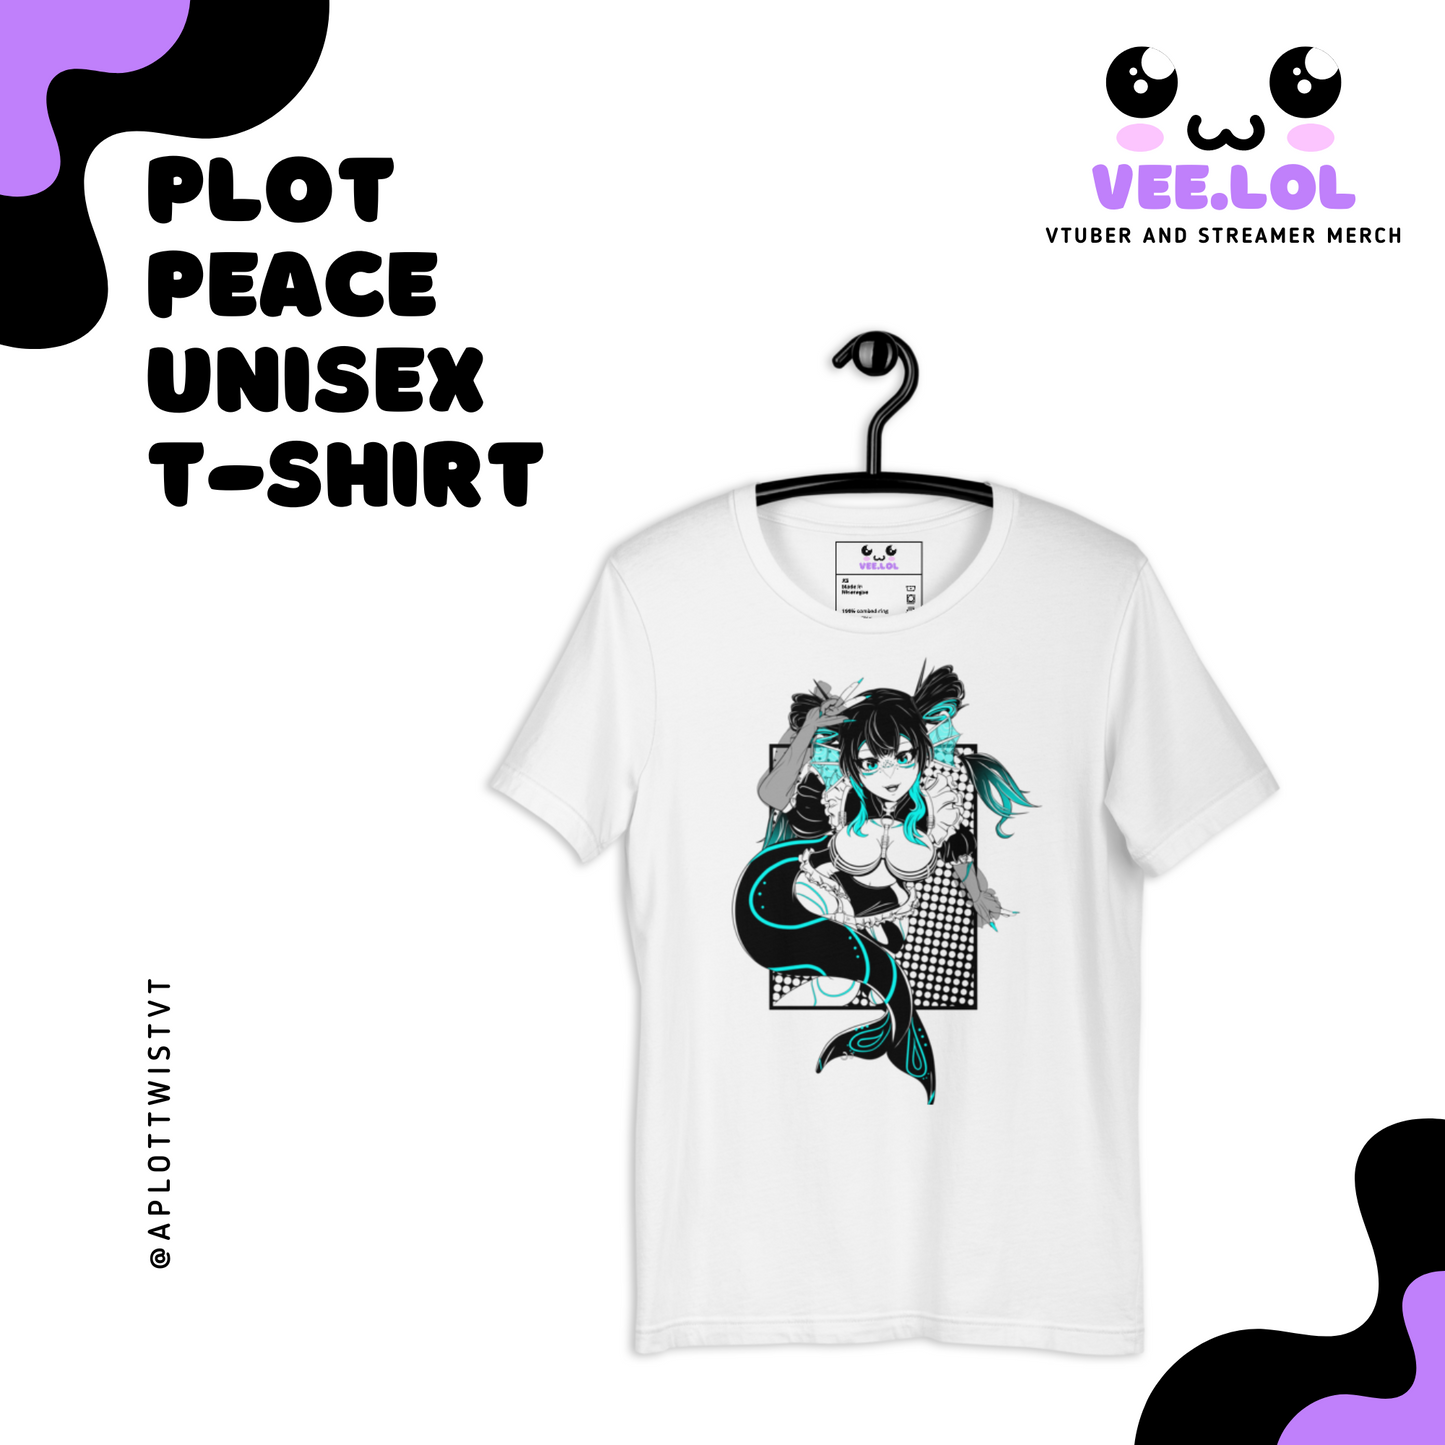 Plot Peace Unisex T-Shirt